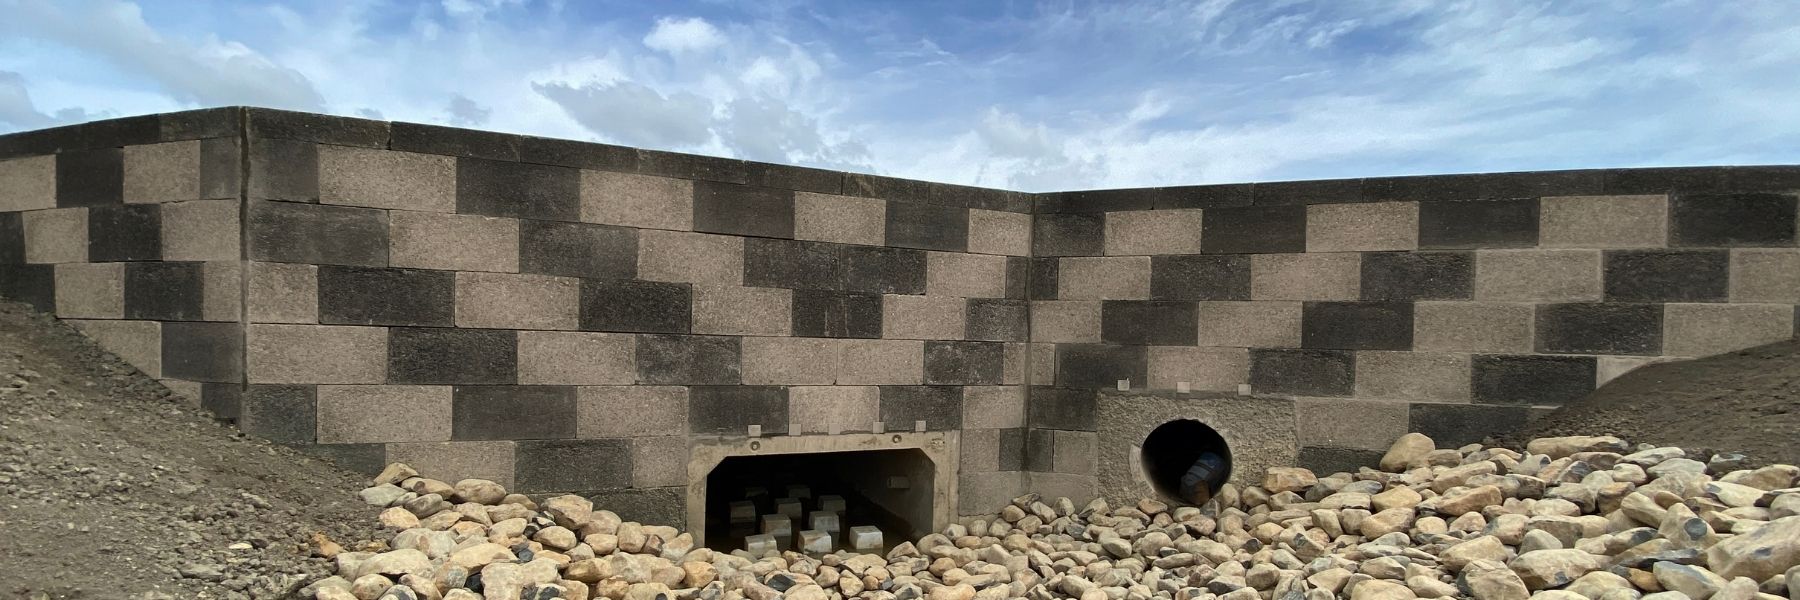 Stonebloc reinforced earth walls